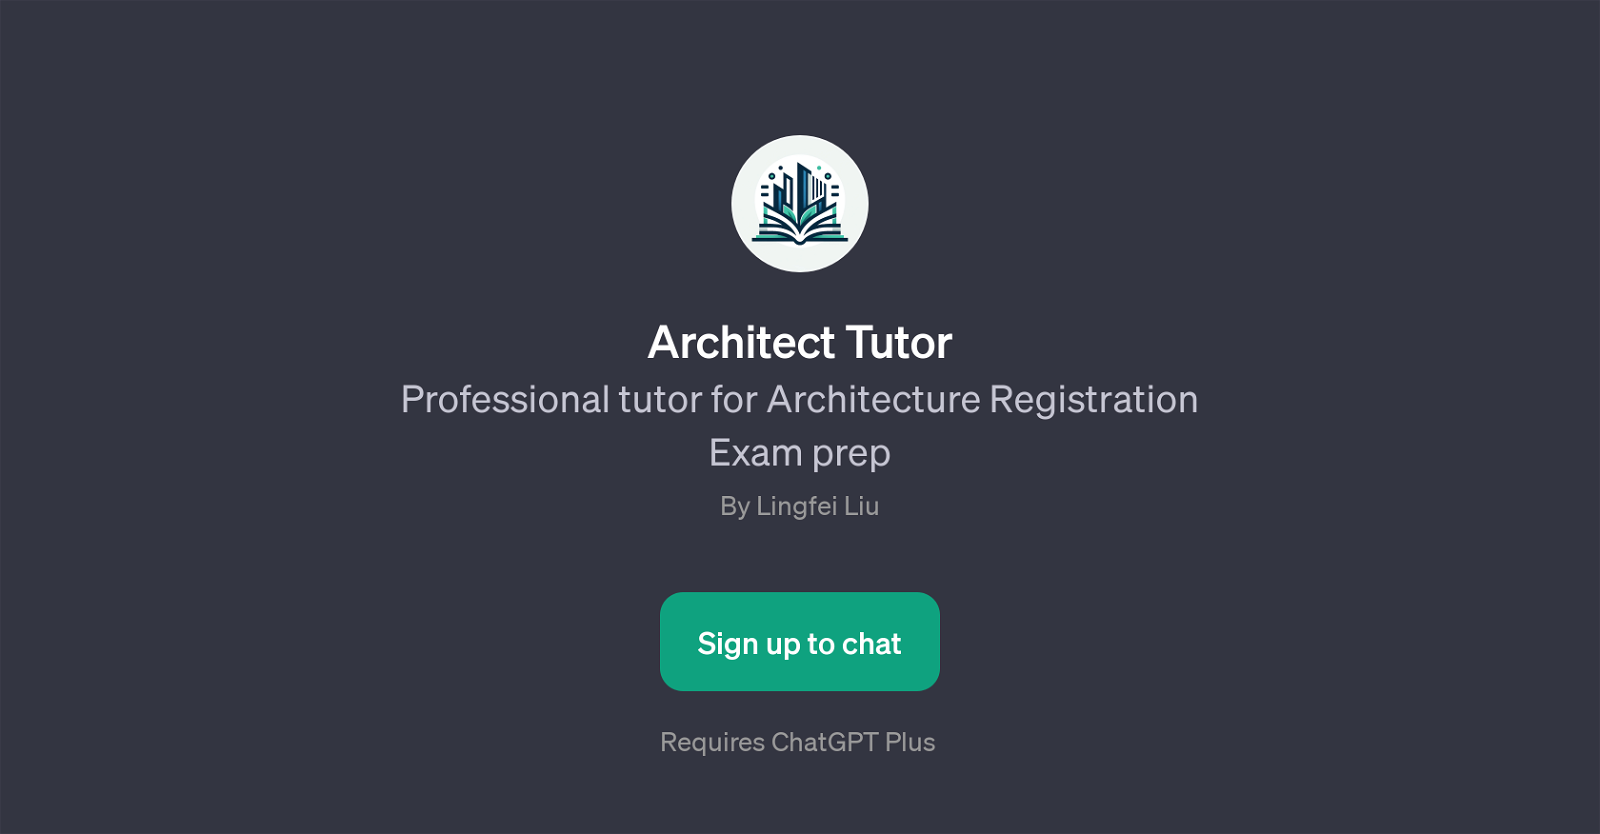 Architect Tutor website